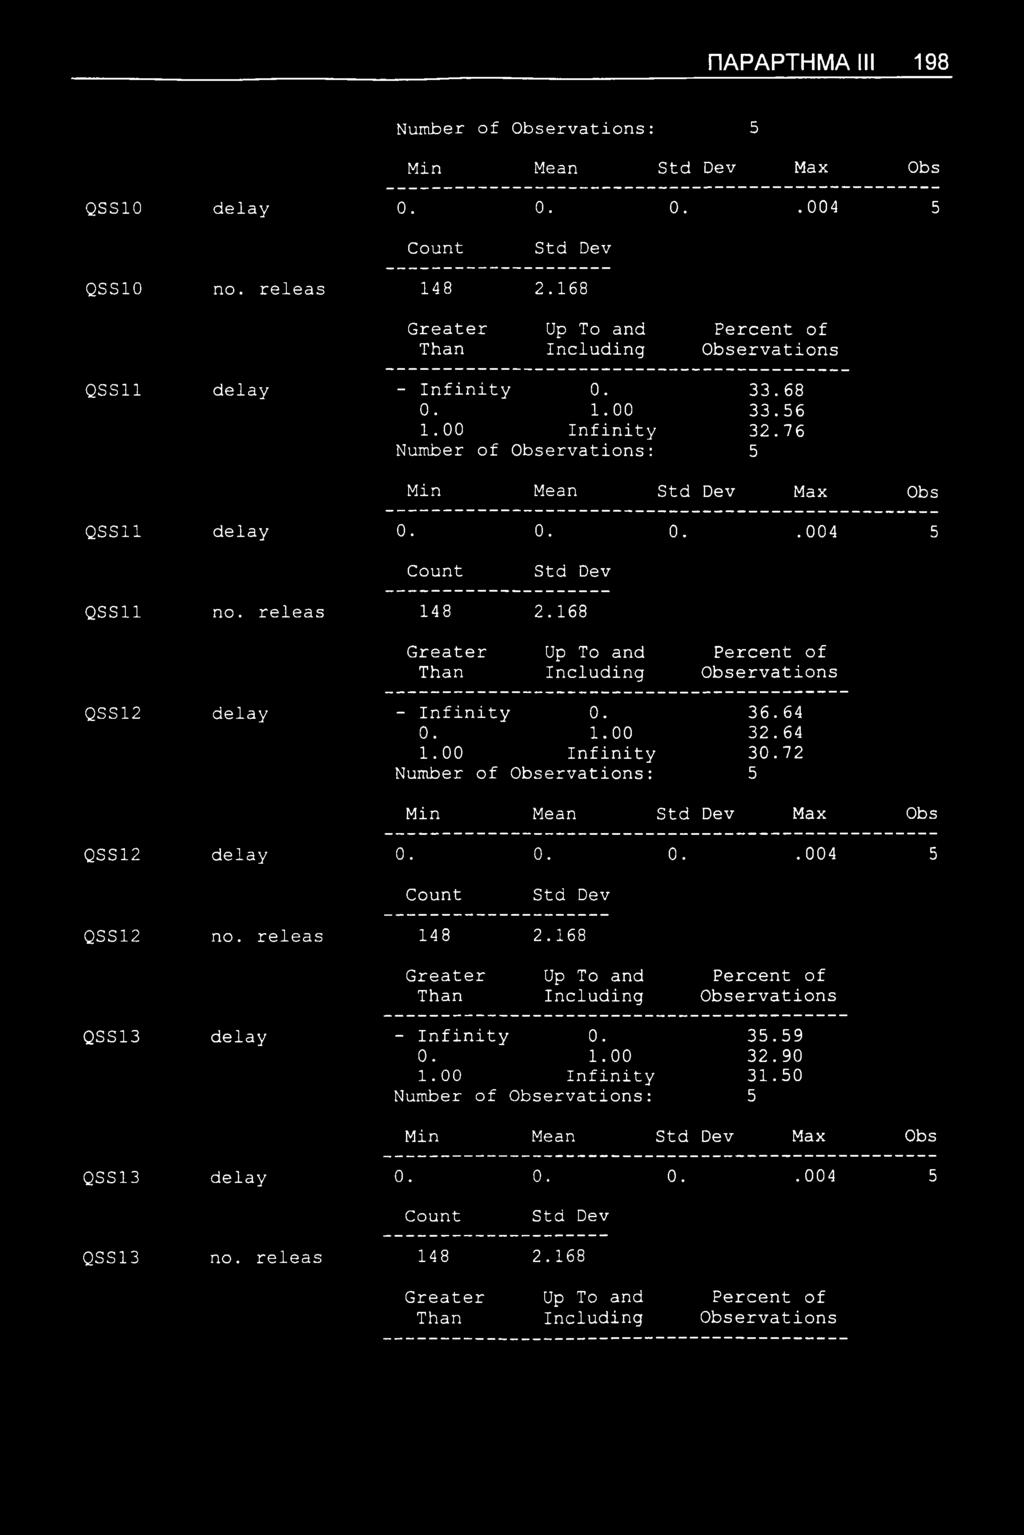 64 1.00 Infinity 30.72 Min Mean Max Obs QSS12 delay 0. 0. 0..004 5 QSS12 no. releas 148 2.168 QSS13 delay - Infinity 0. 35.59 0. 1.00 32.